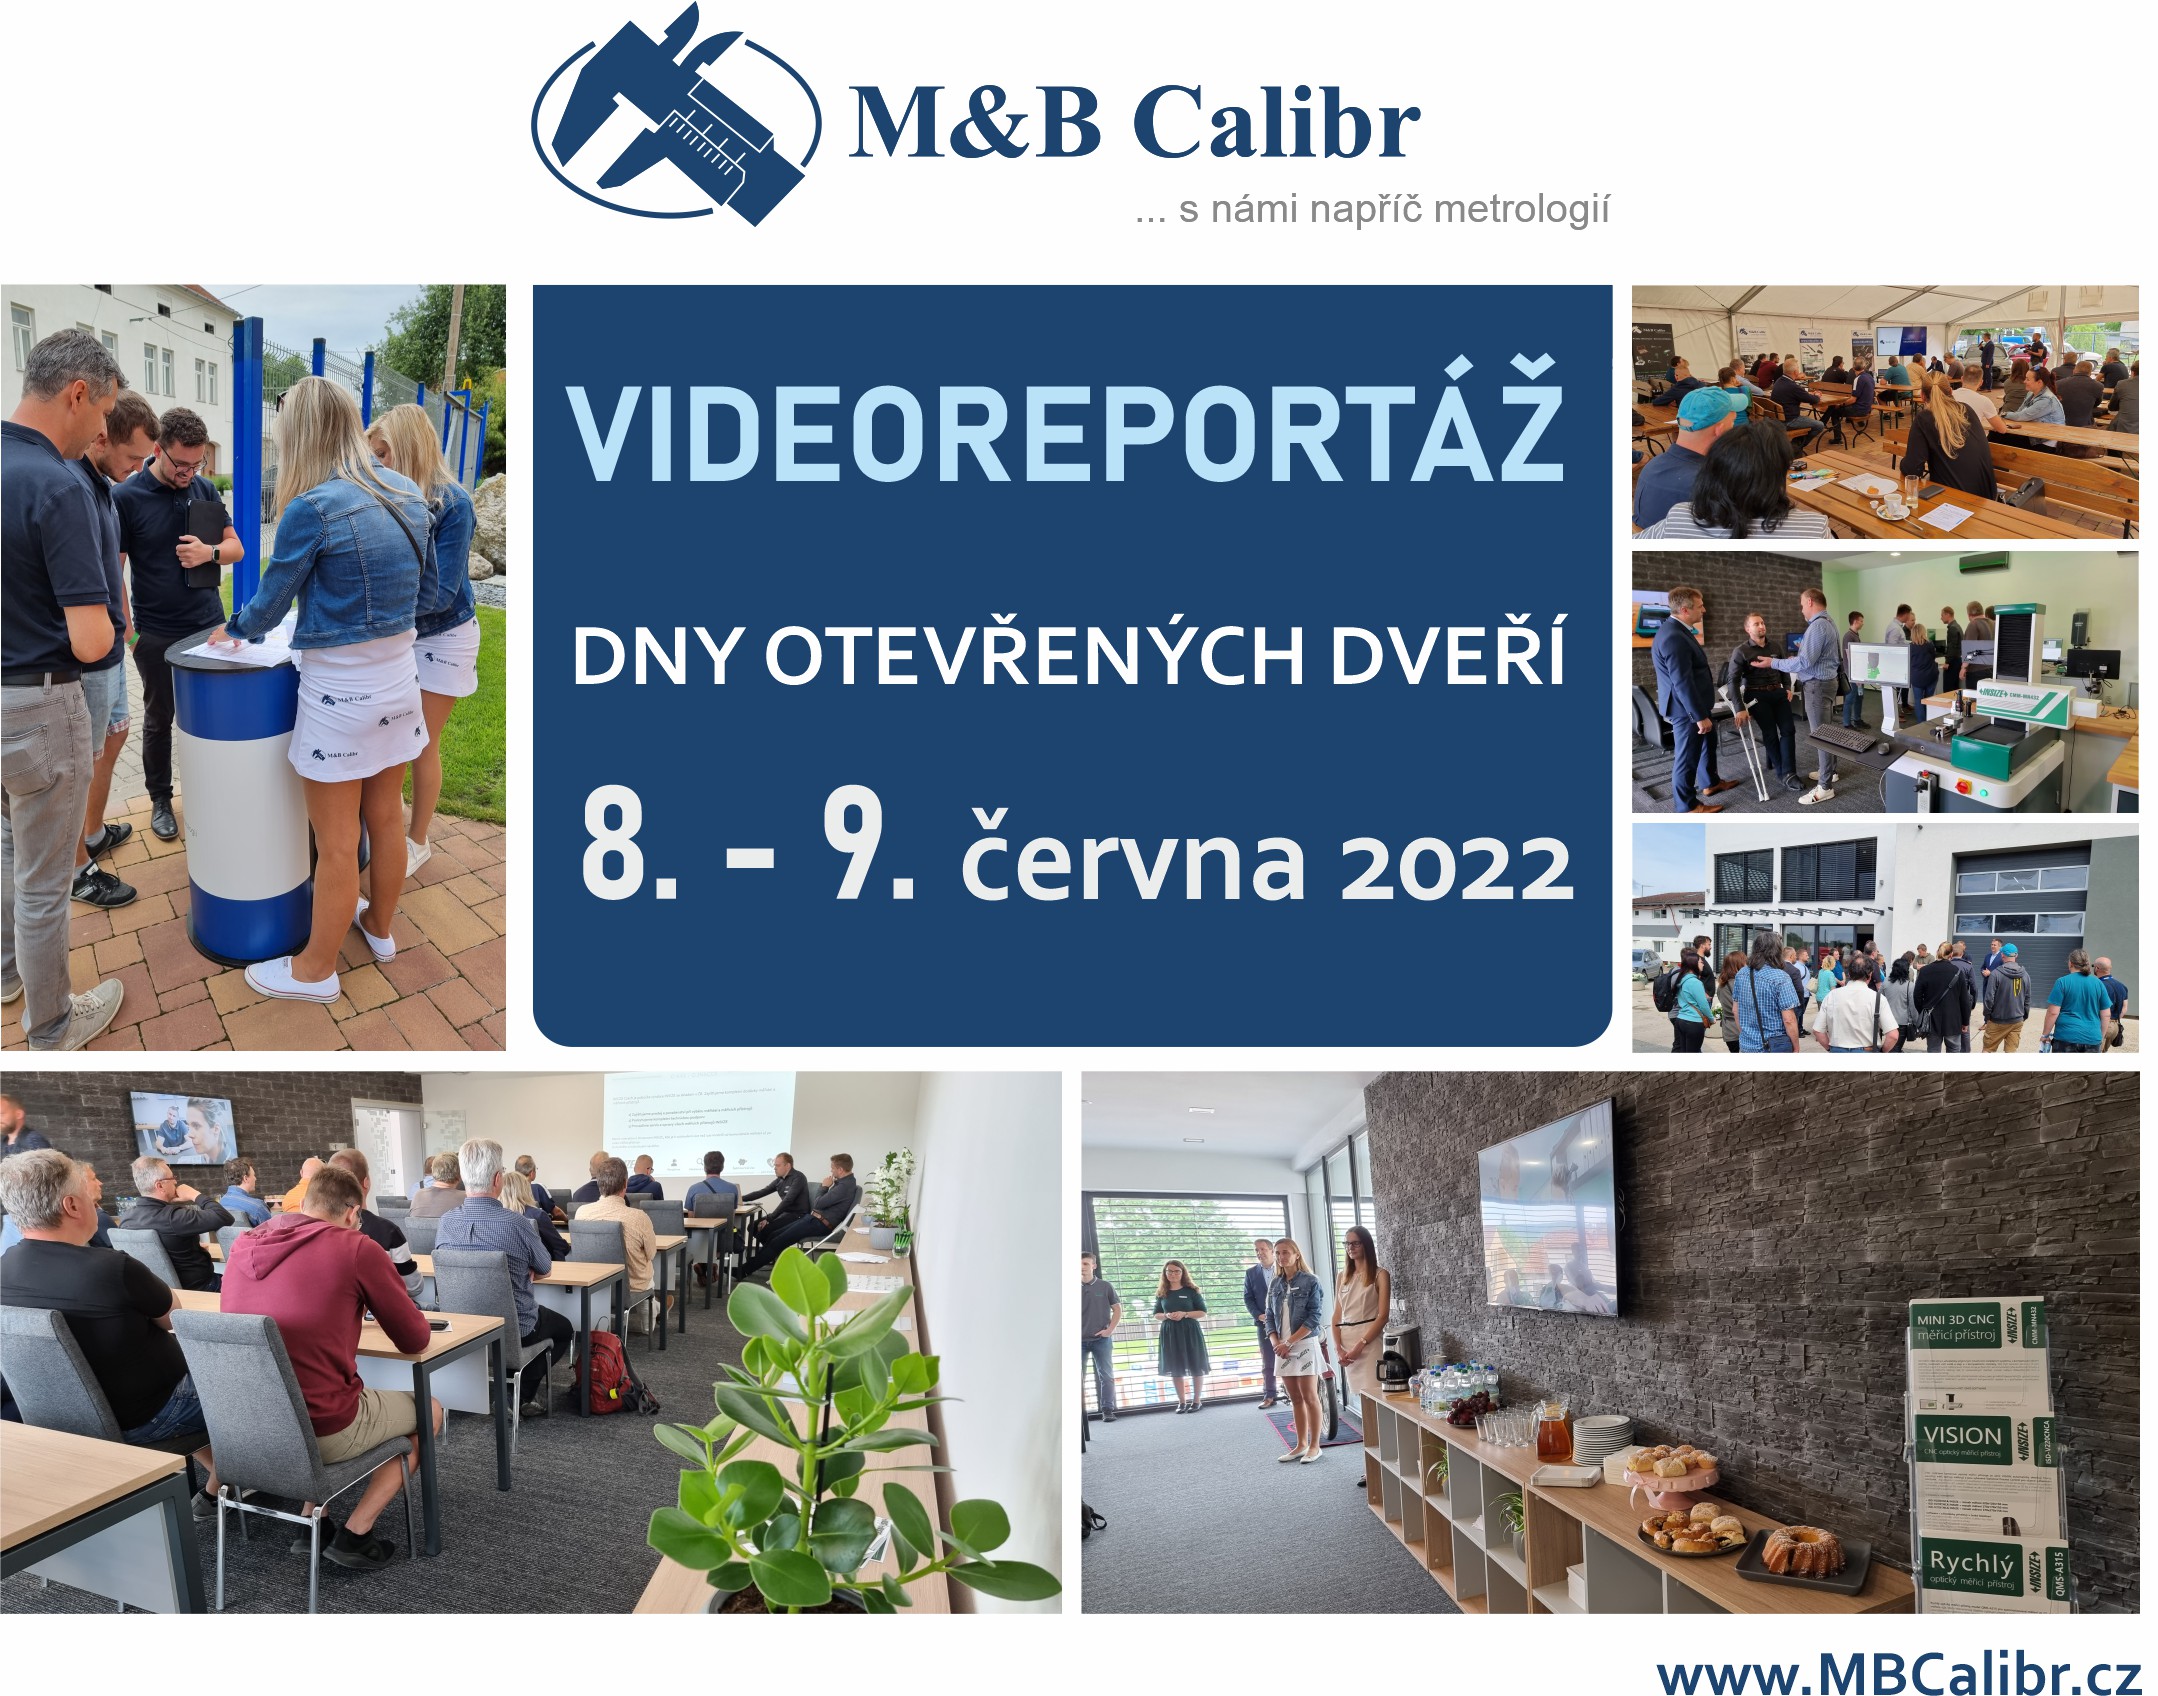 videoreportaz_dny_otevrenych_dveri_mb_calibr_2022.jpg